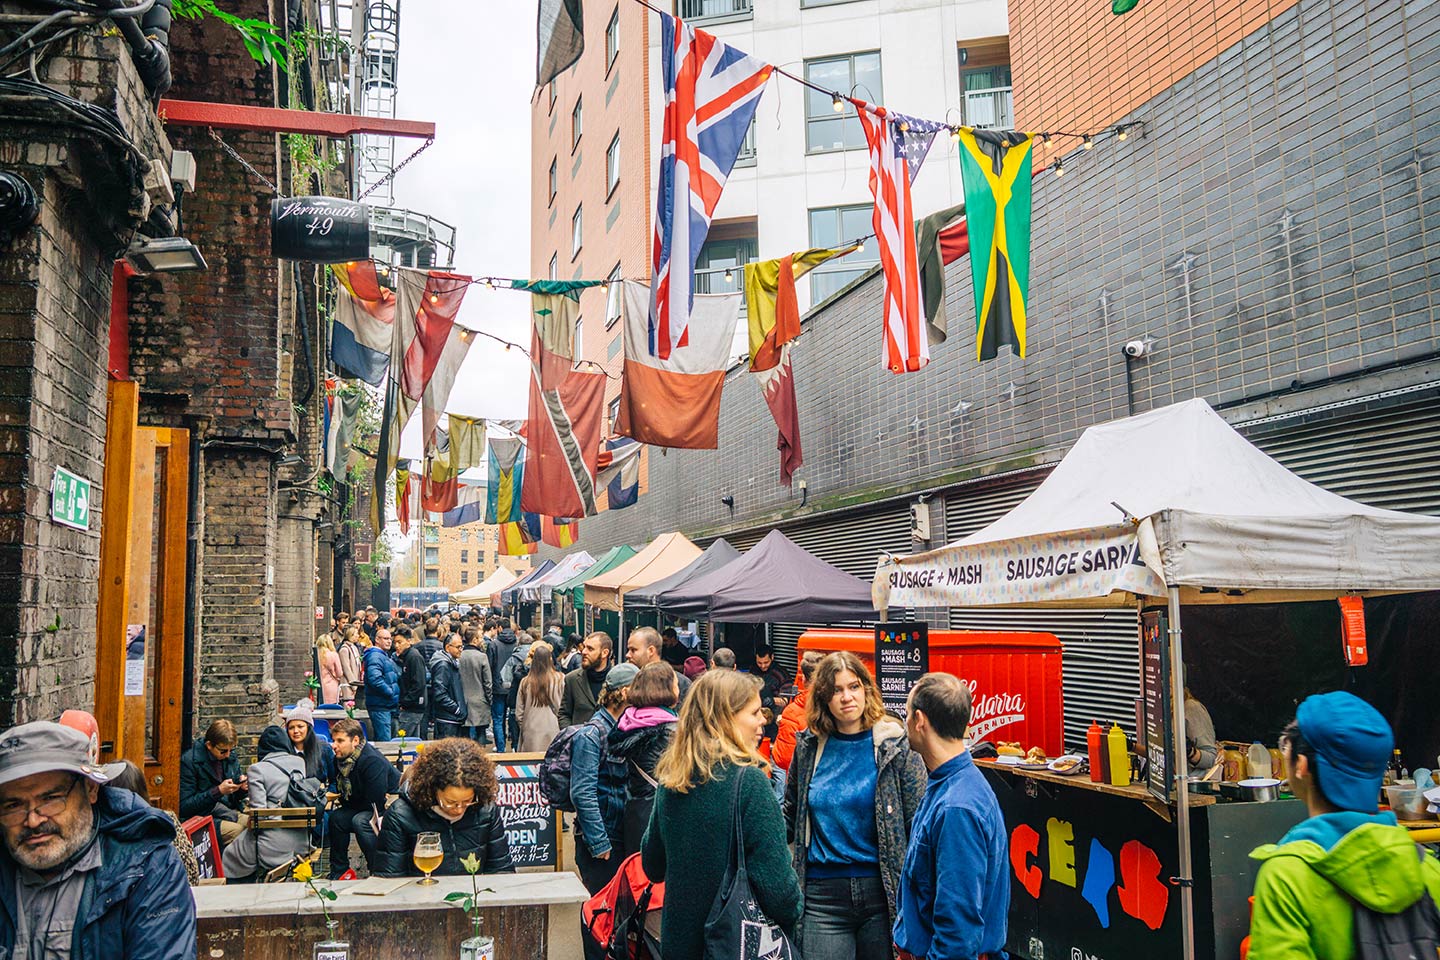 Maltby Street Market, Bermondsey, London | travel blog guide